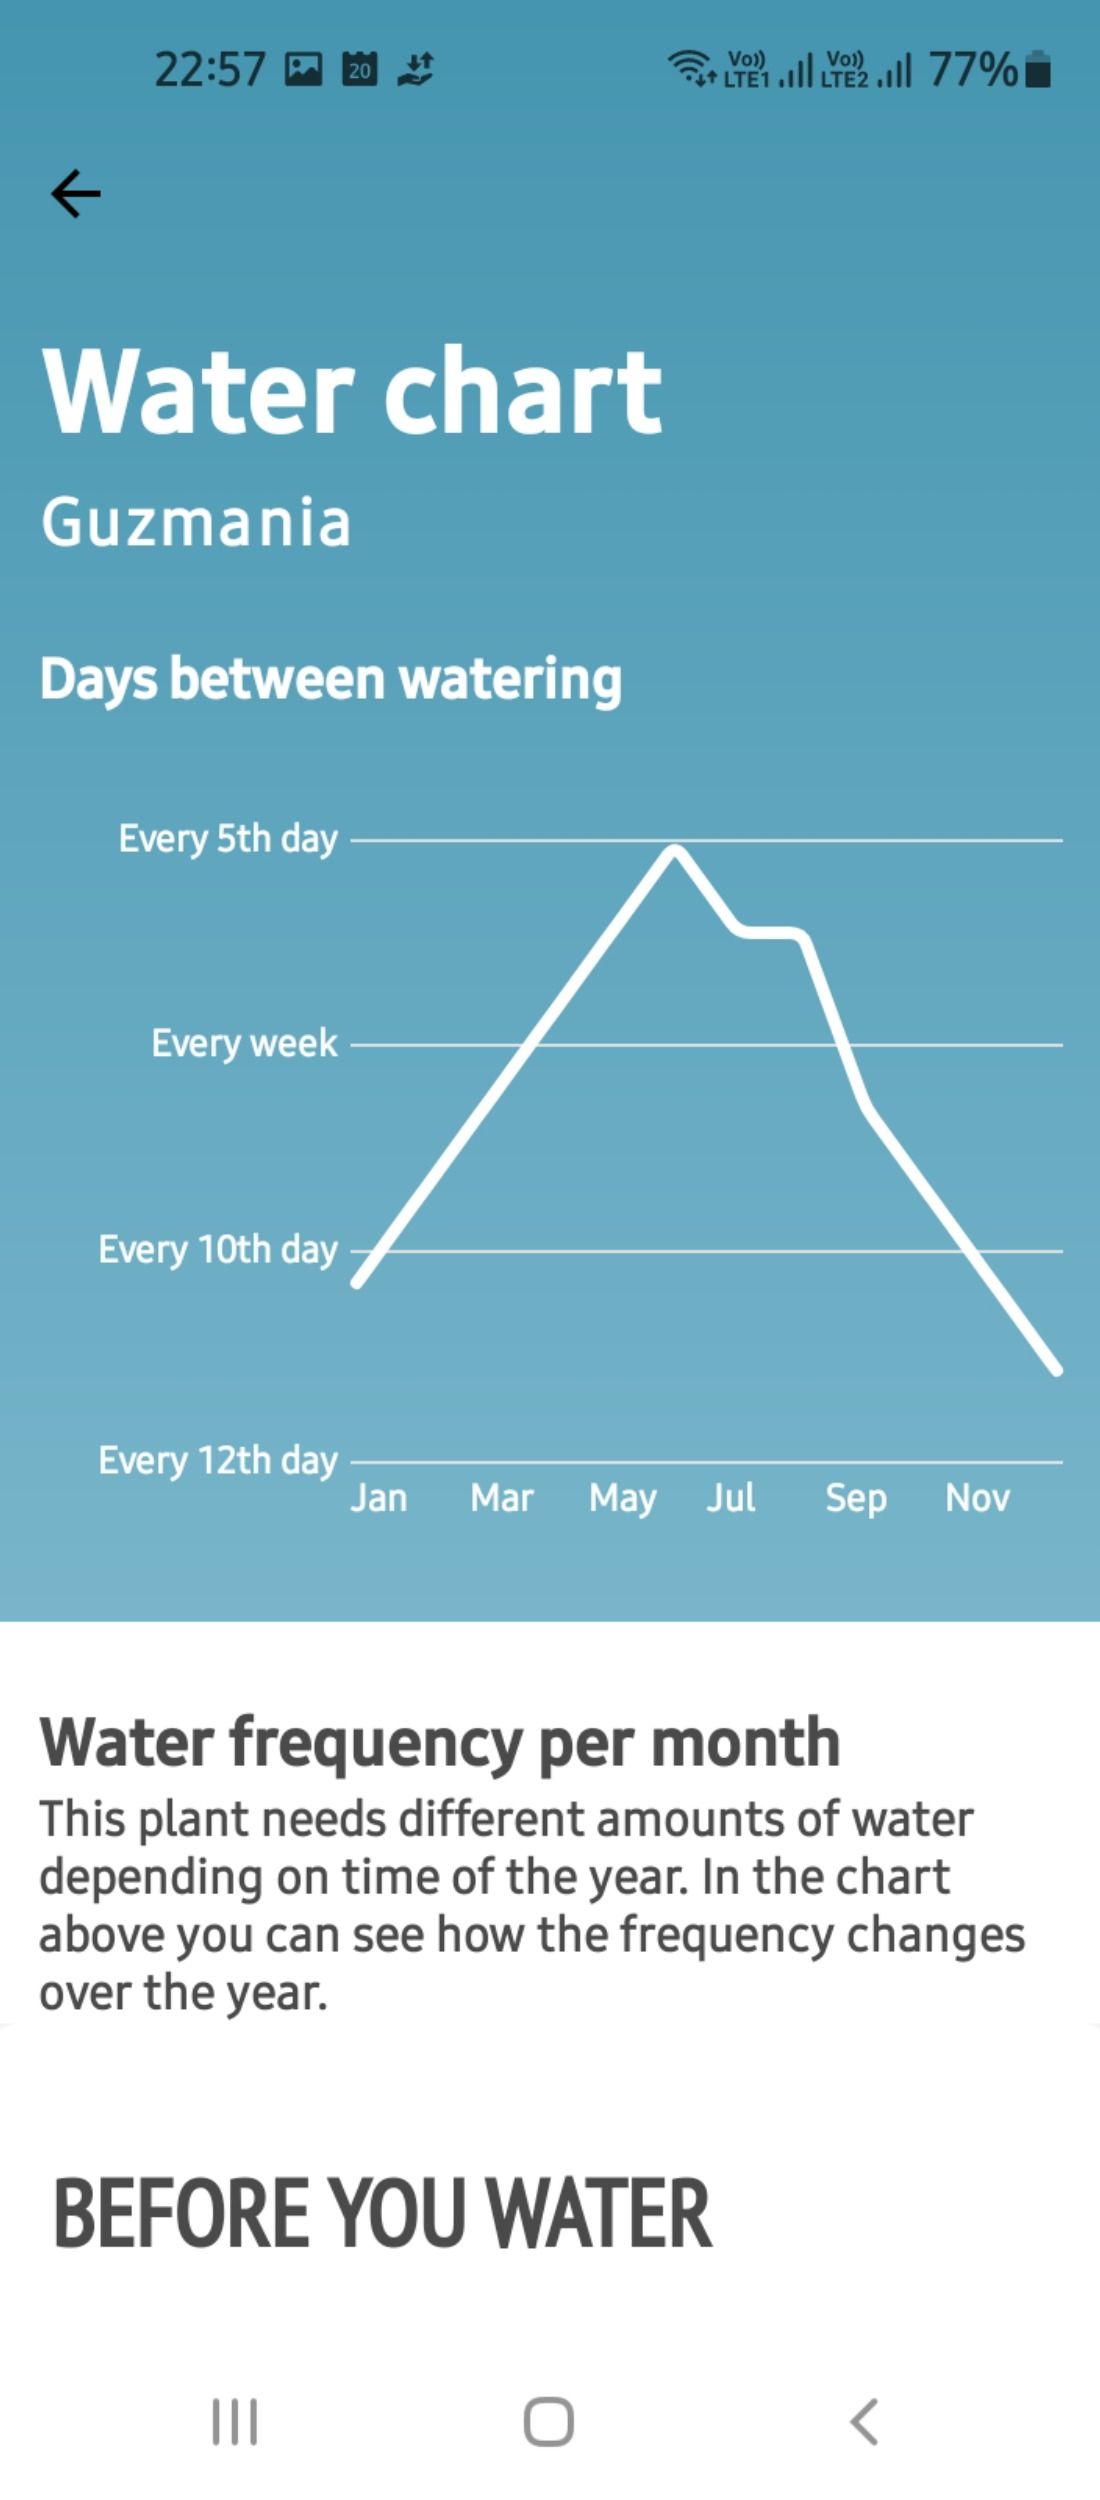 Watering requirements in Planta app